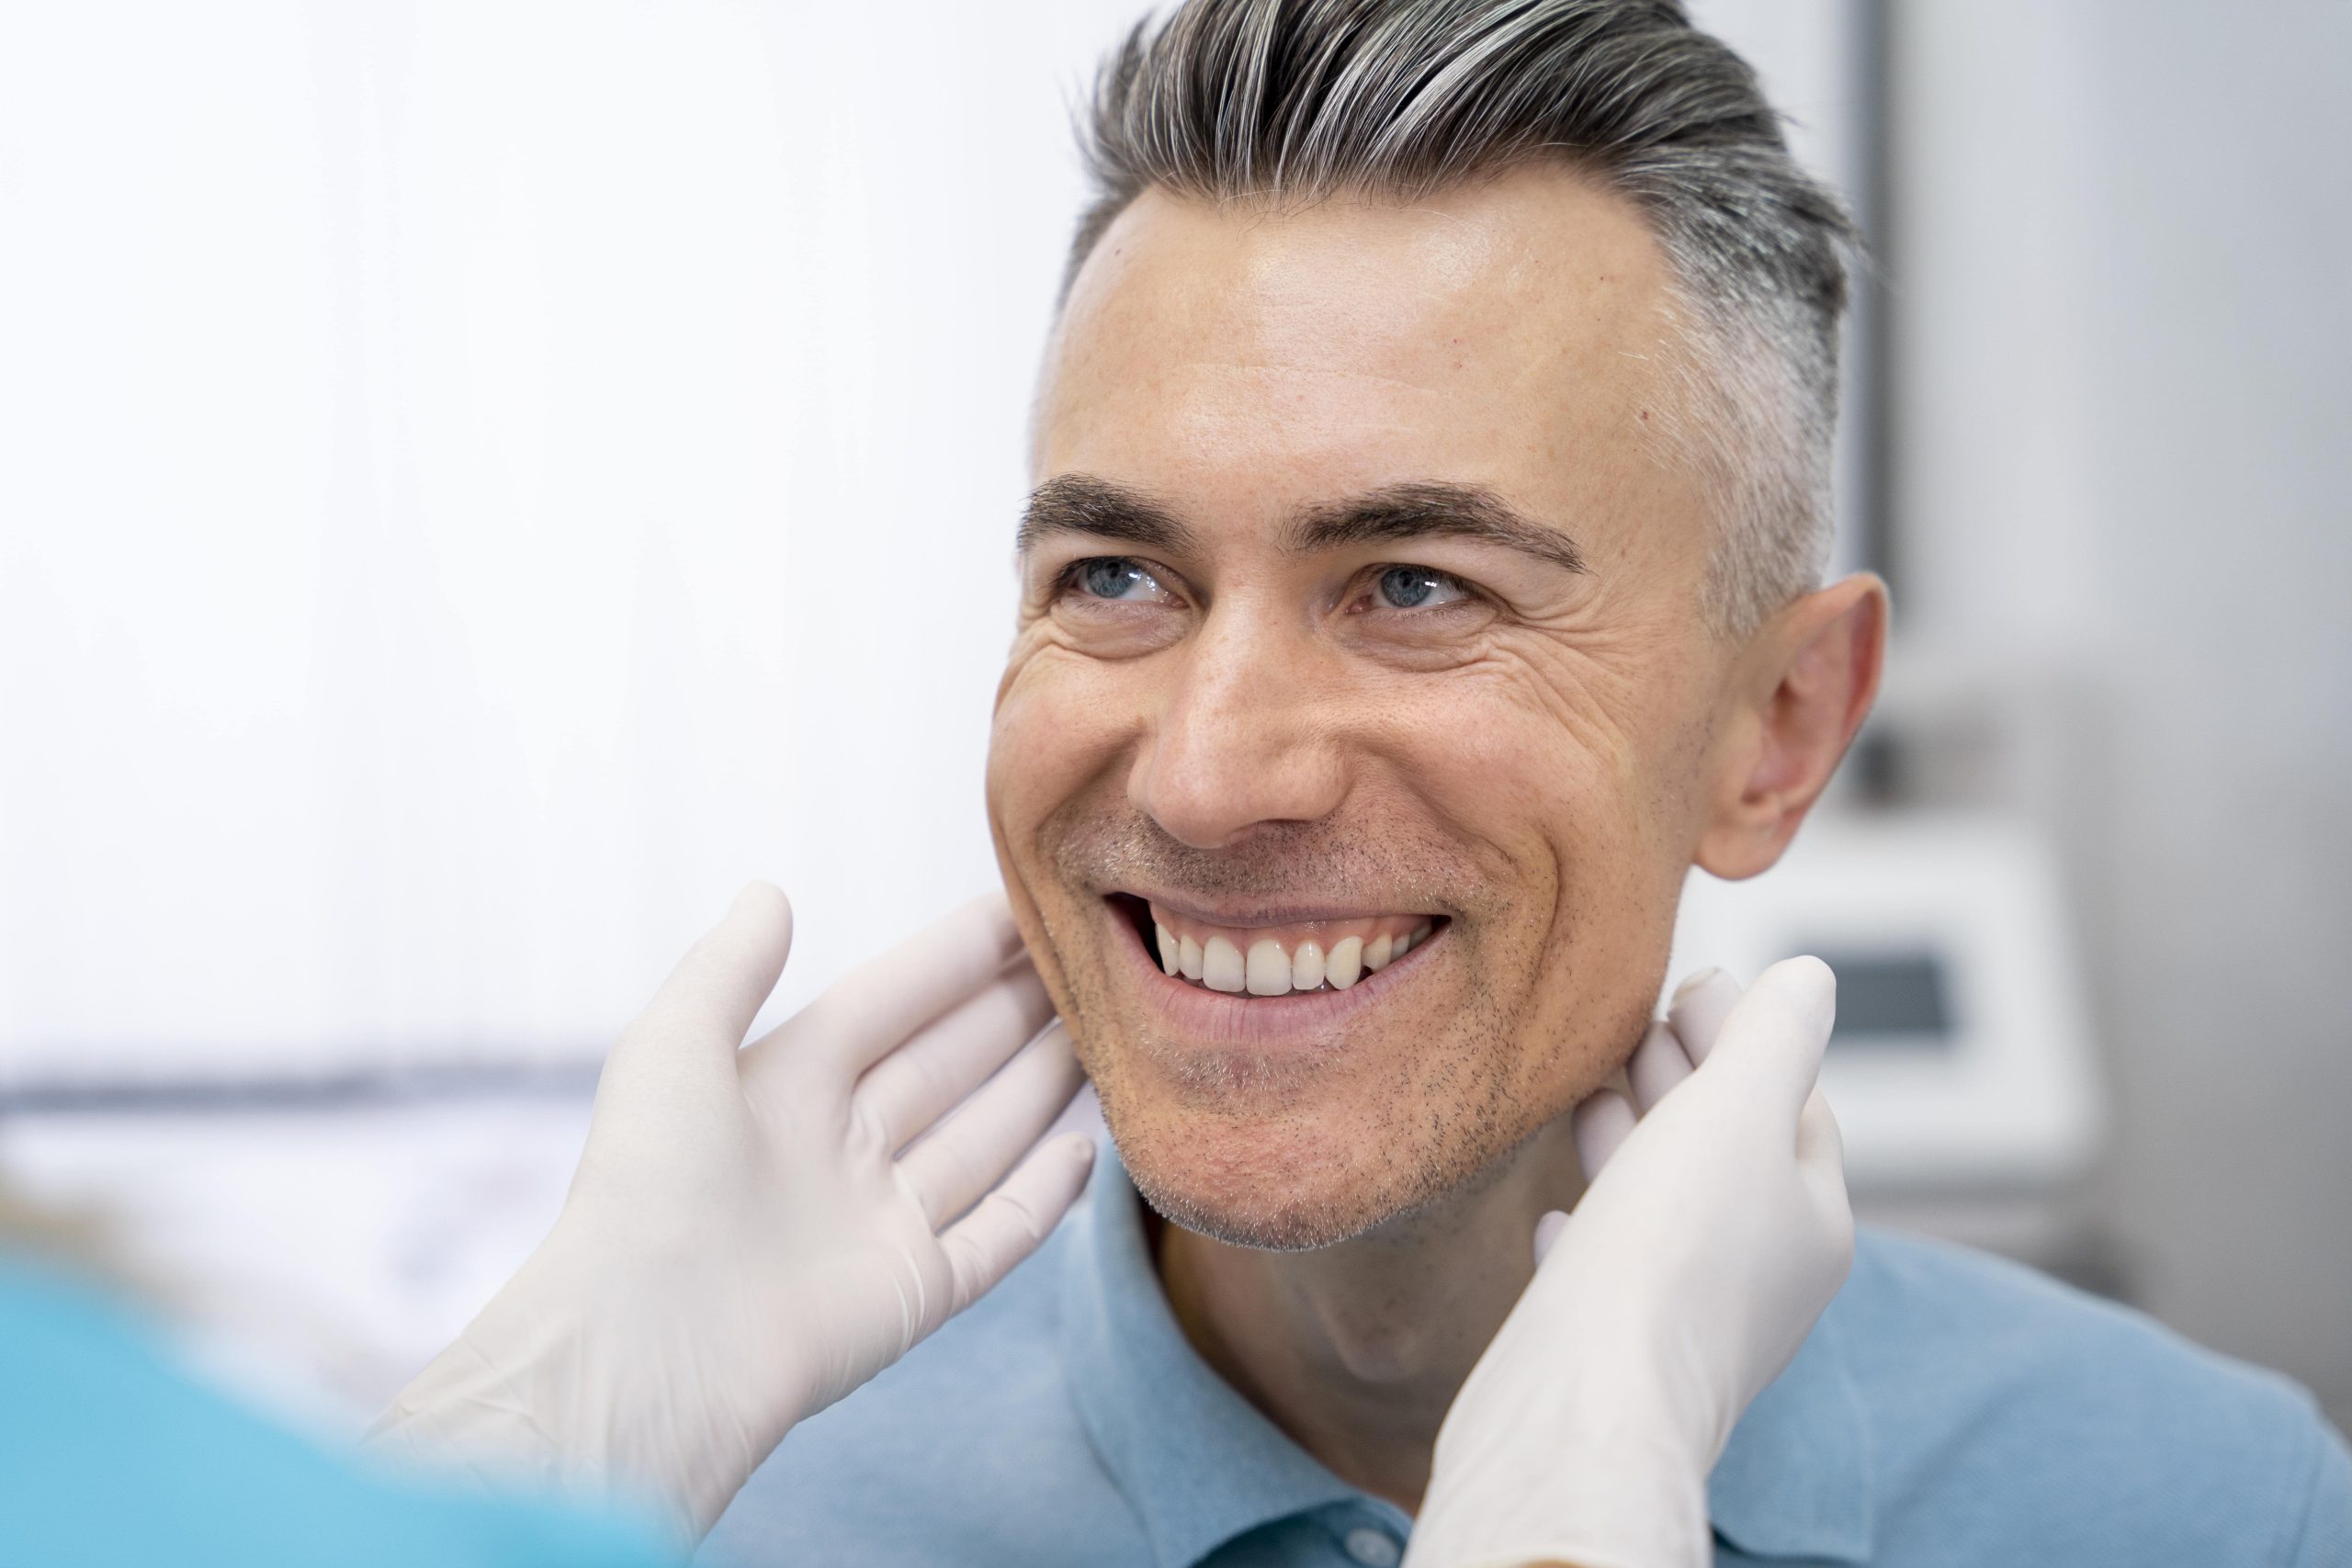 dentist checking dental implants